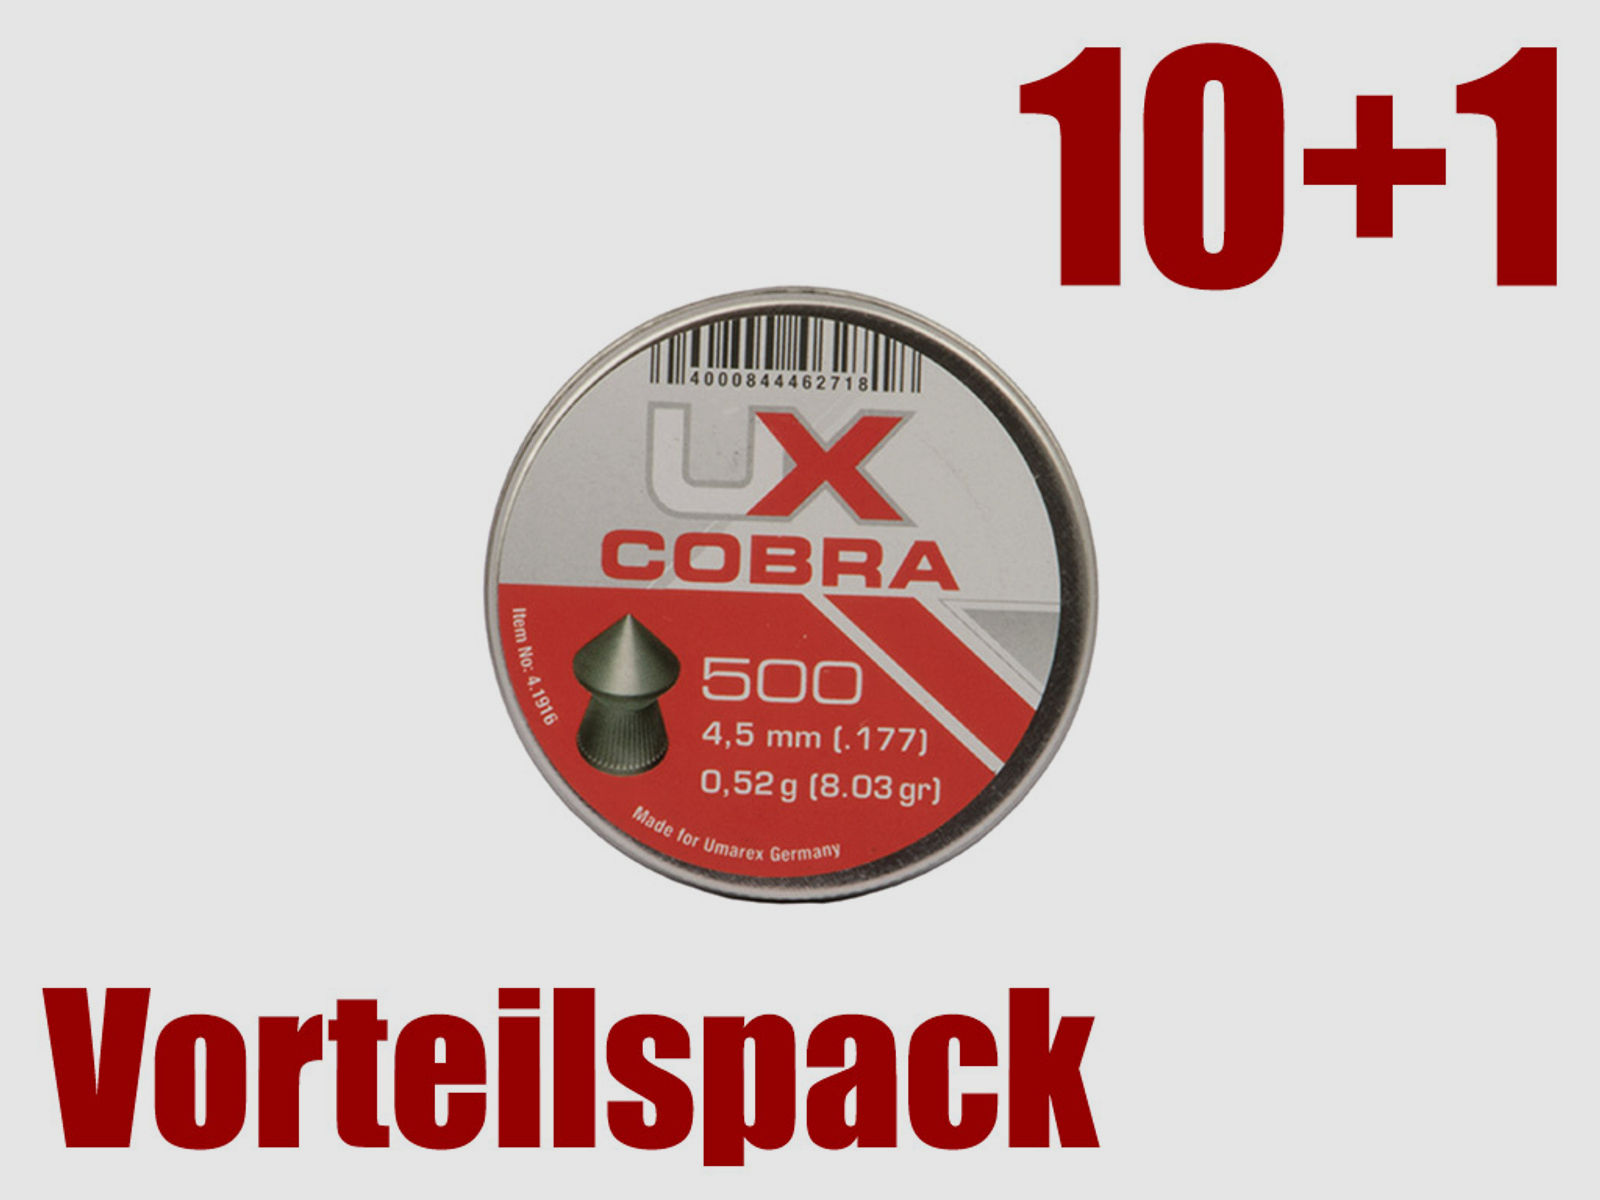 Vorteilspack 10+1 Spitzkopf Diabolos Umarex Cobra Kaliber 4,5 mm 0,52 g geriffelt 11 x 500 StĂĽck